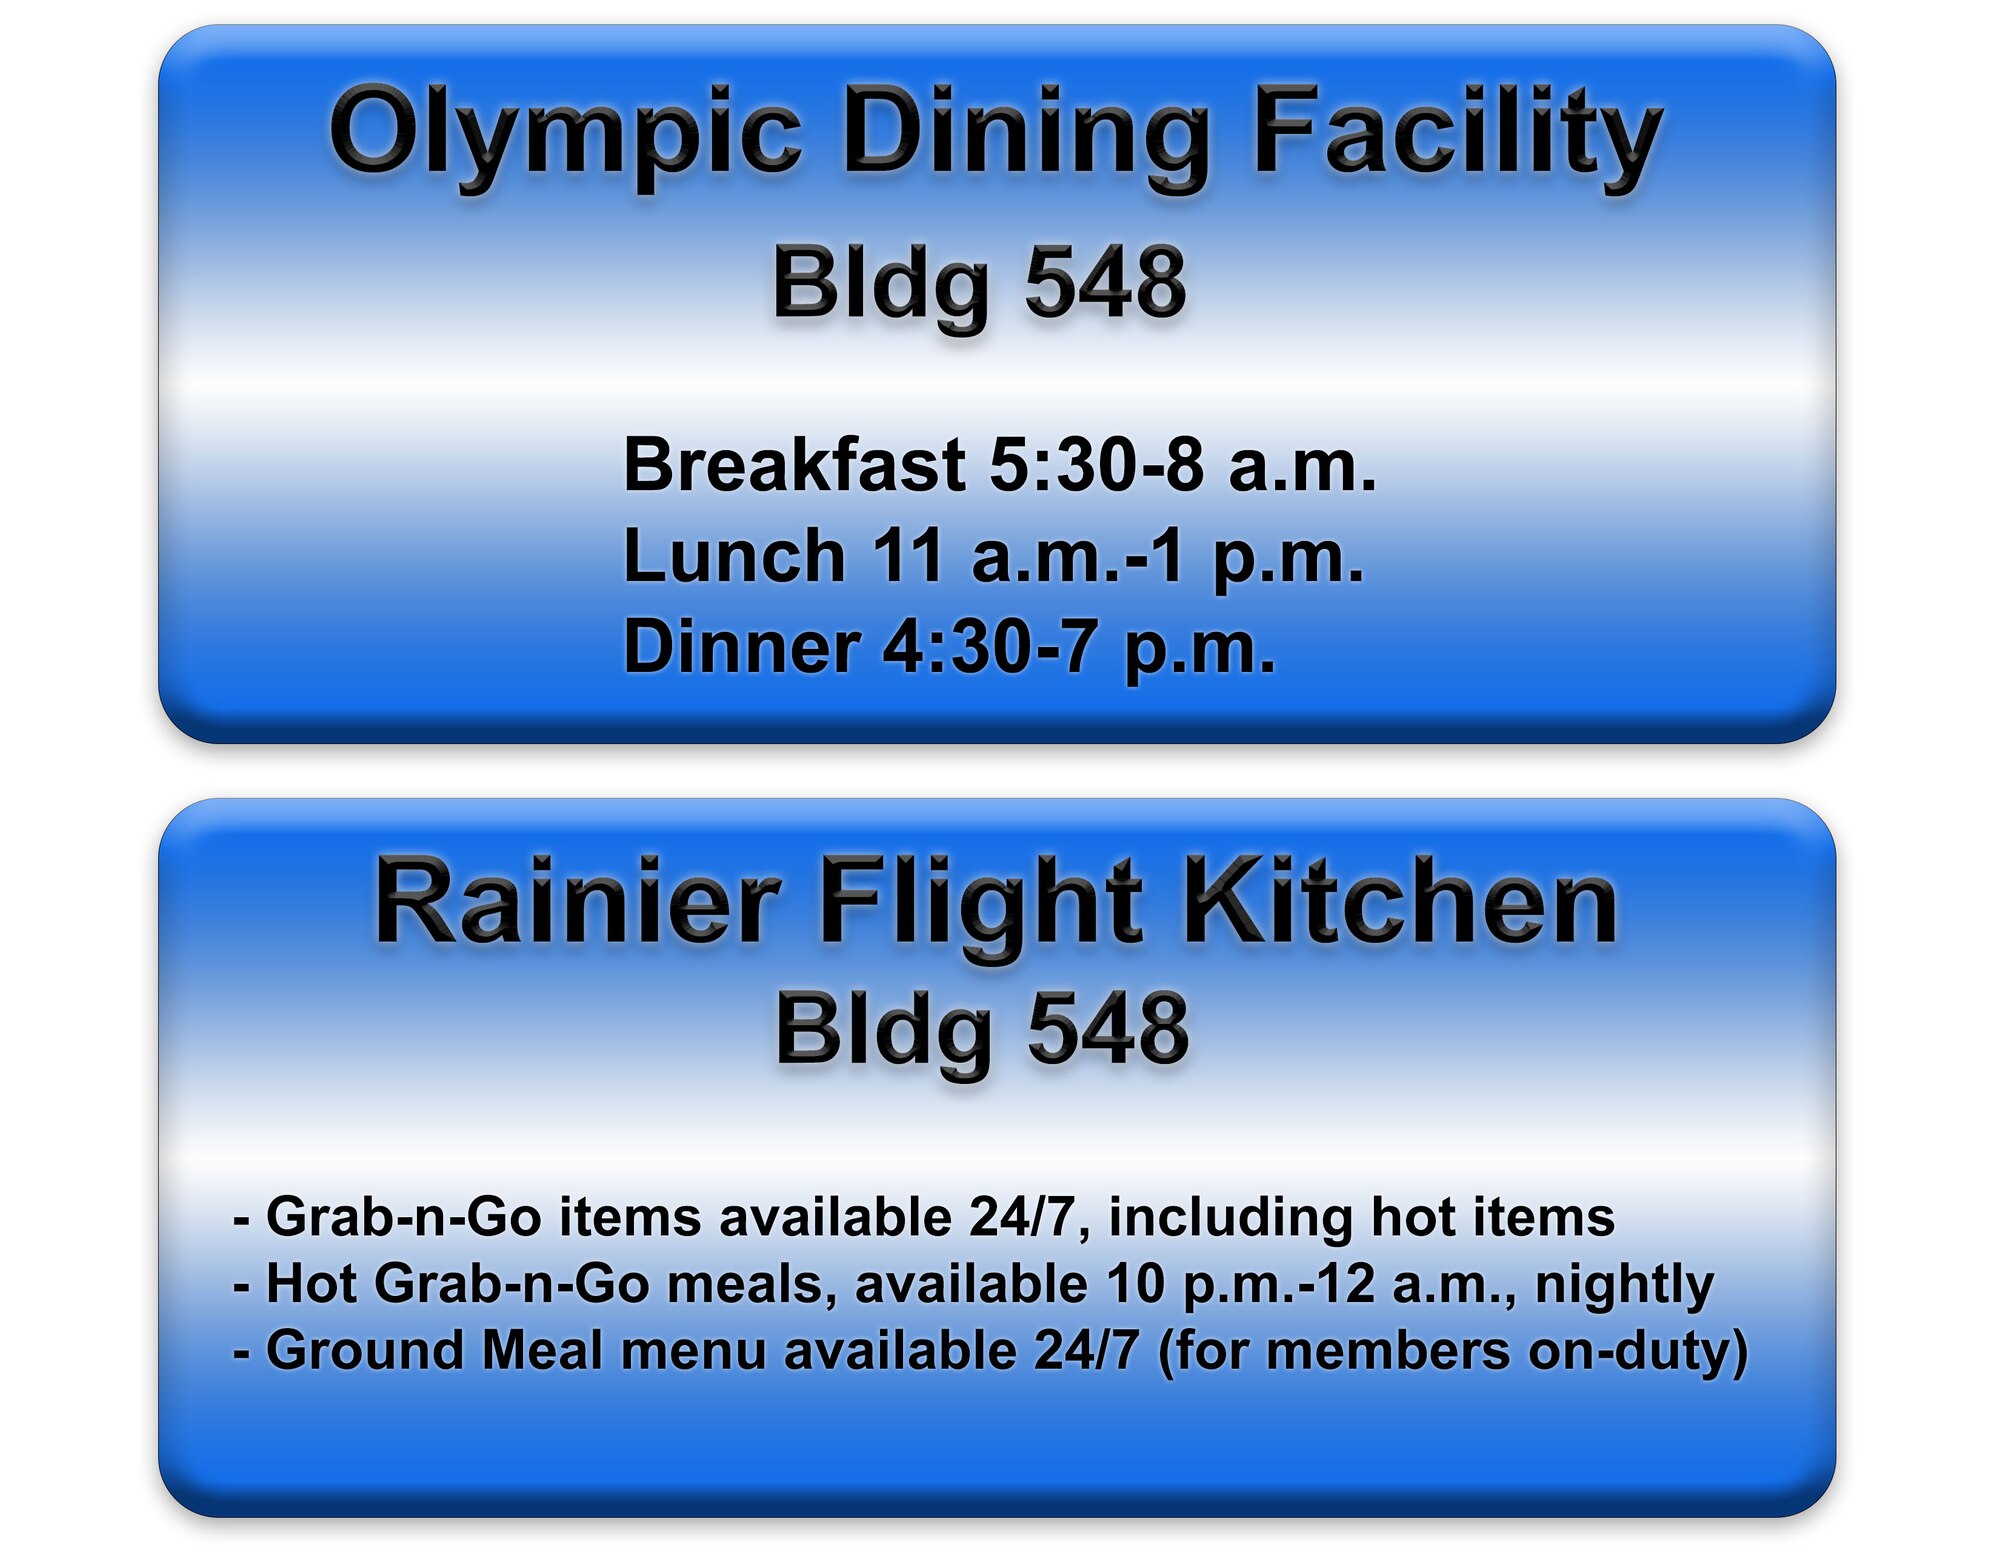 Olympic Dining Facility and Rainier Flight Kitchen info